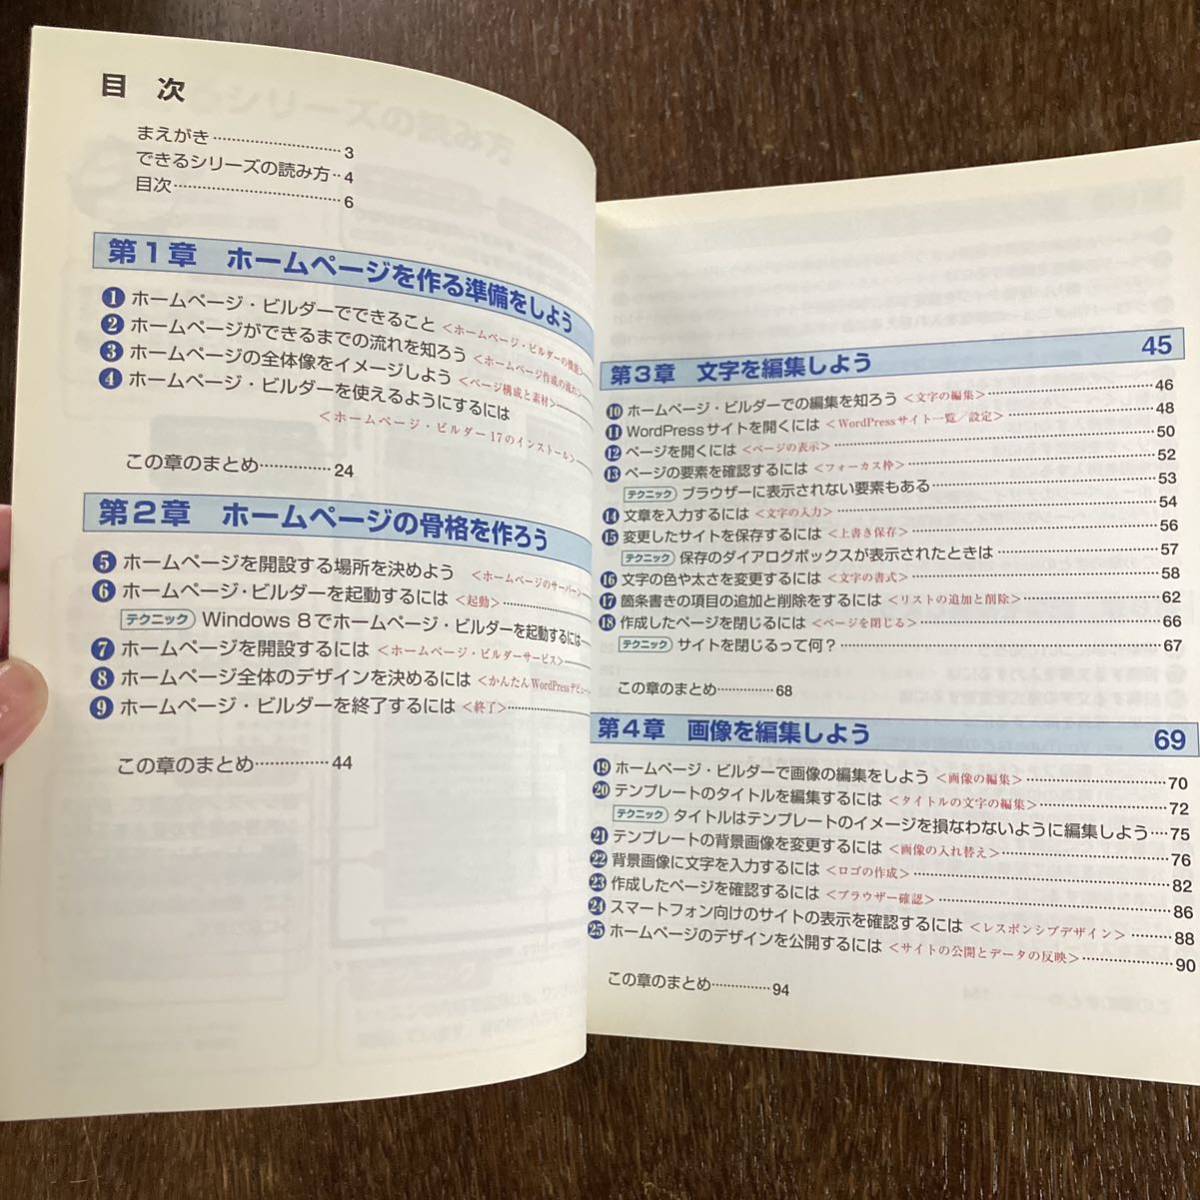  is possible Baum page builder 17 special version Impress Japan 